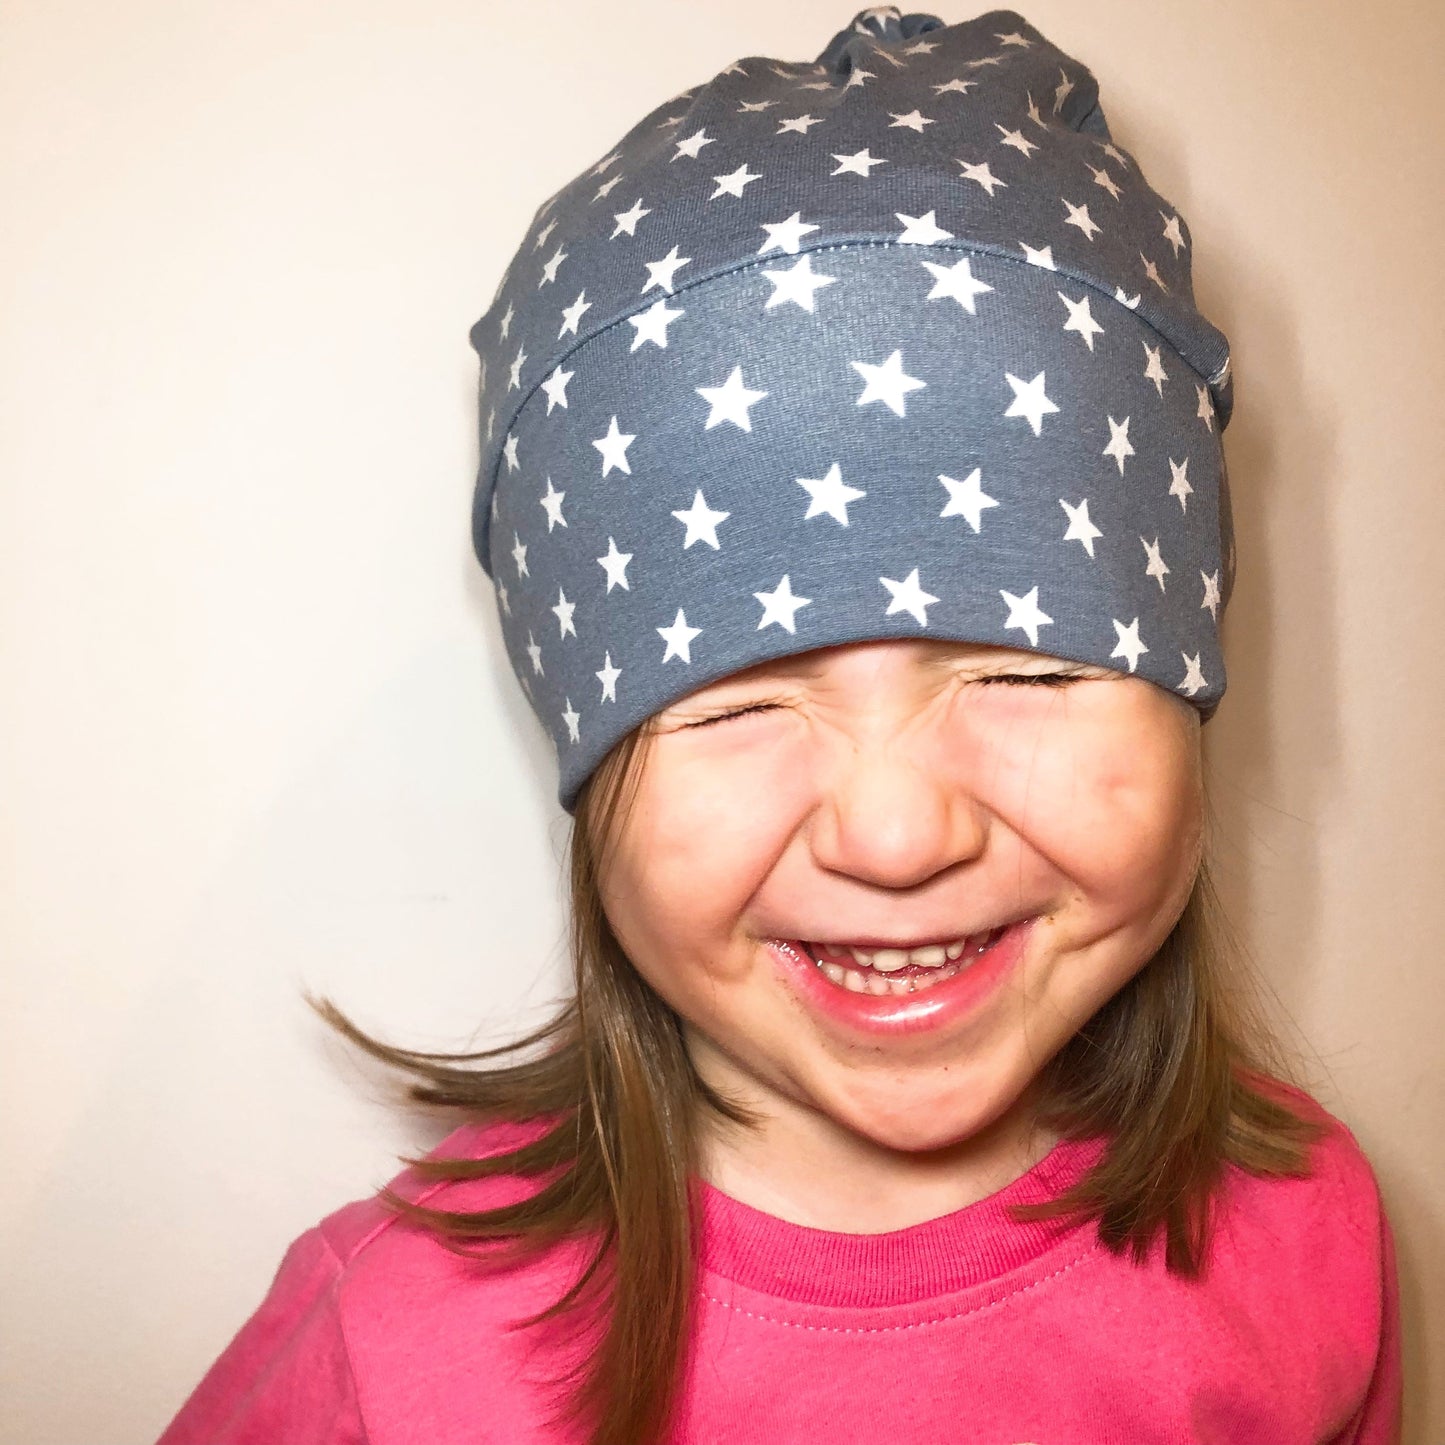 Beanie Hat in Little Kid: Apples on Pink